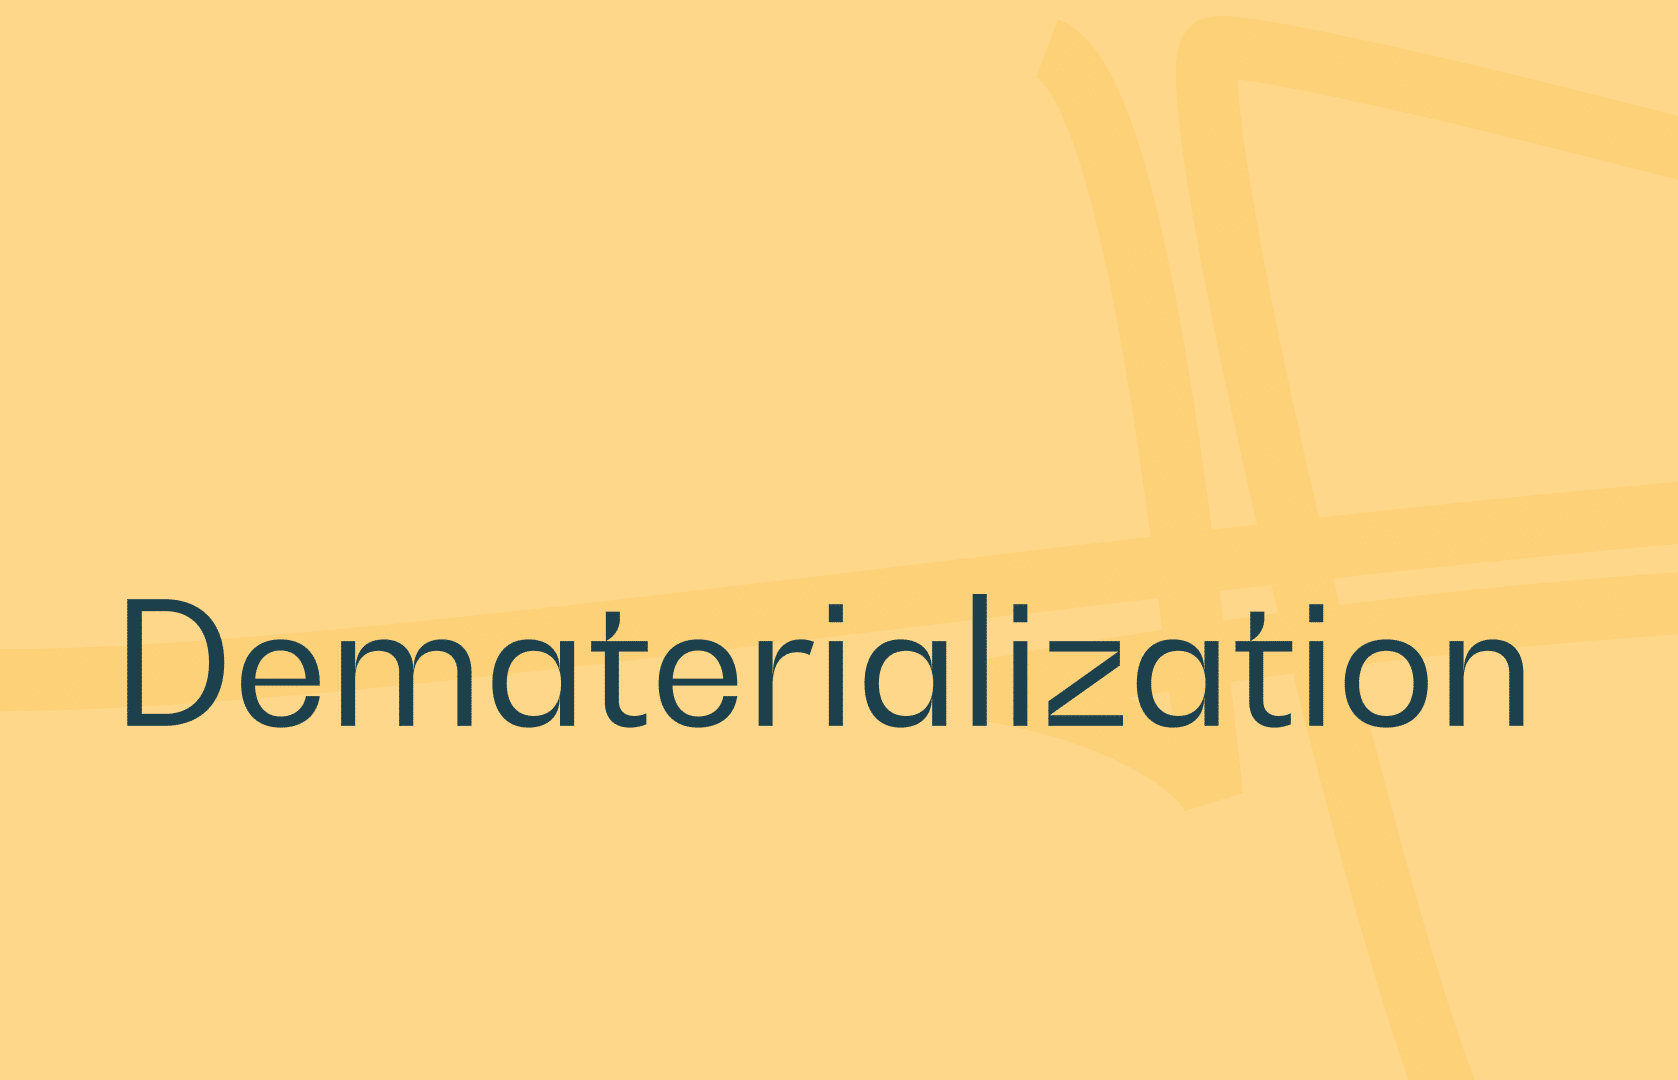 Dematerialization definition